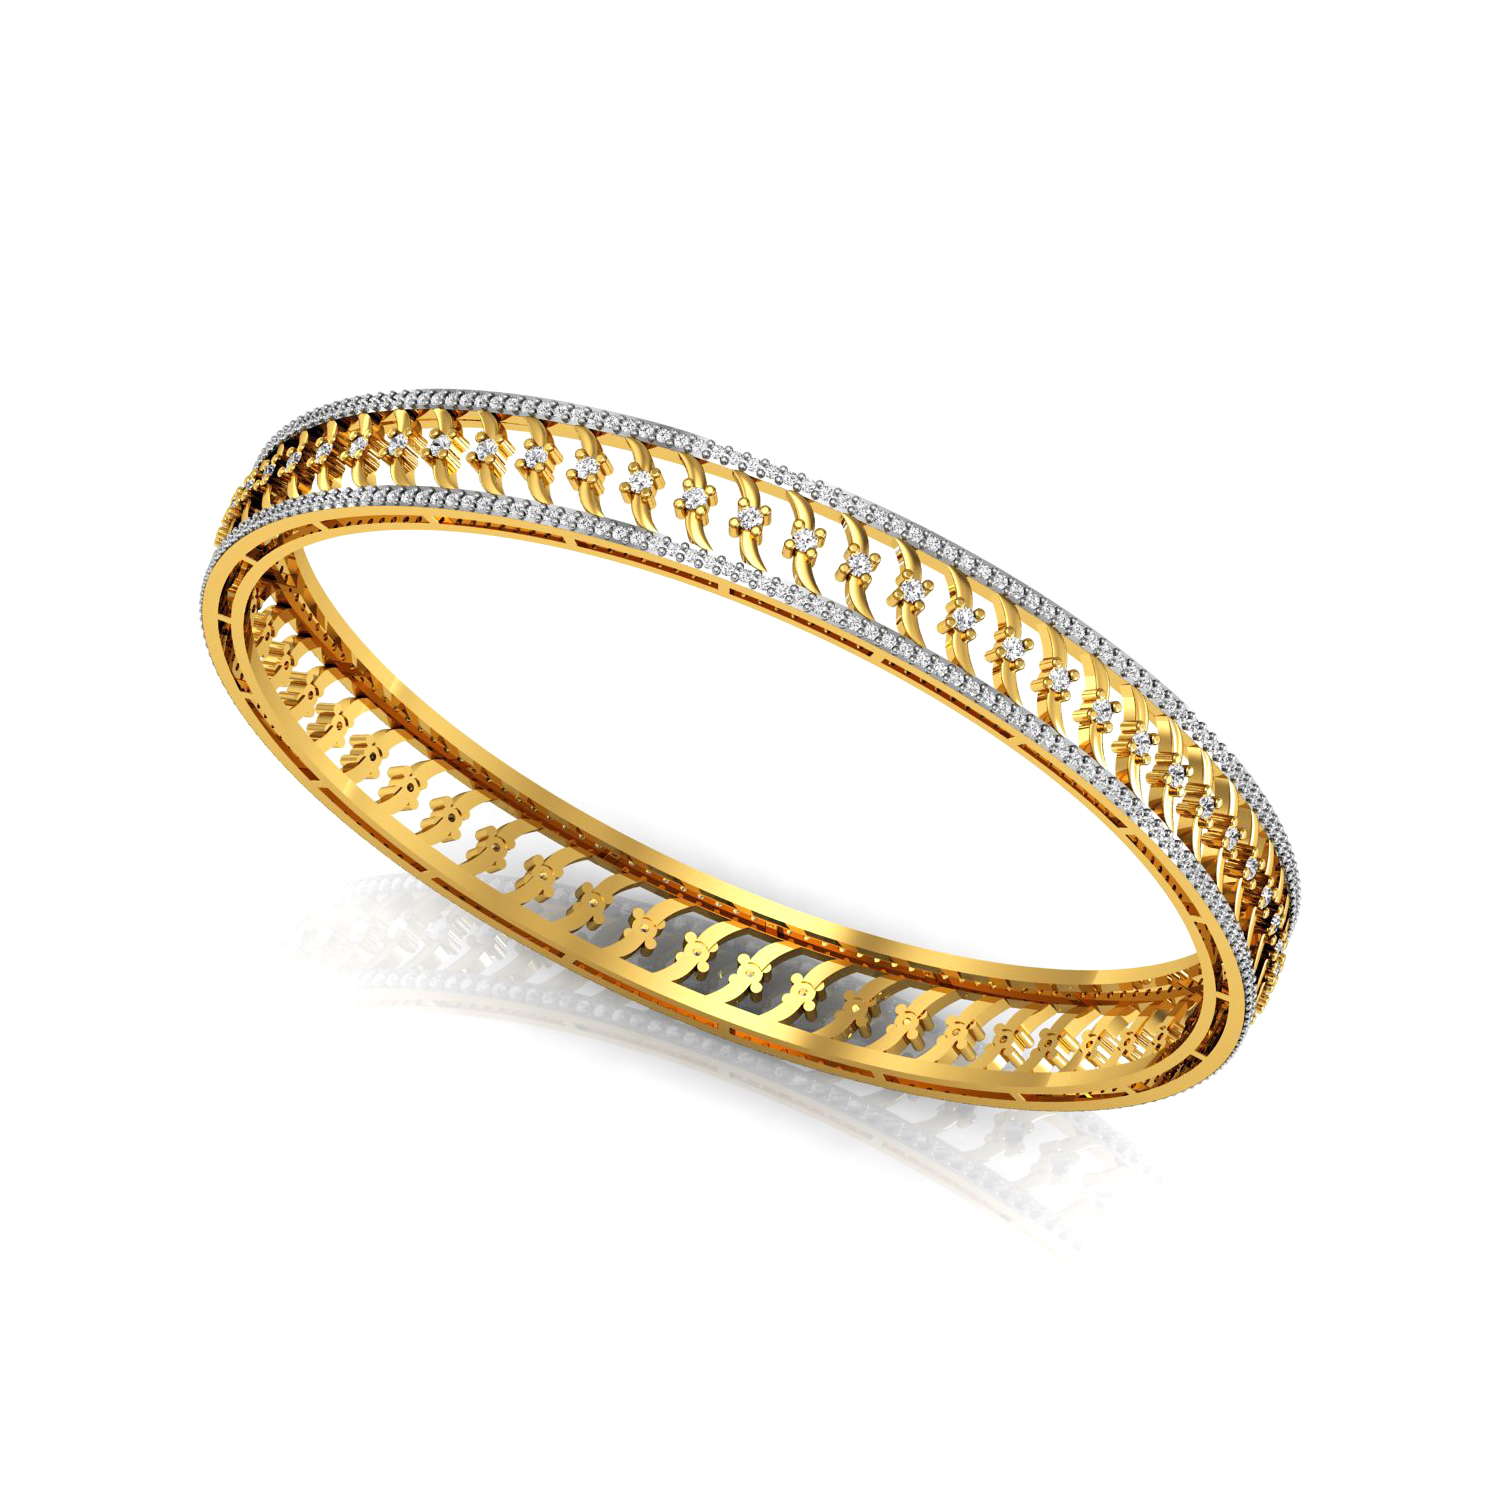 Solid gold wedding bangle studded with real diamond